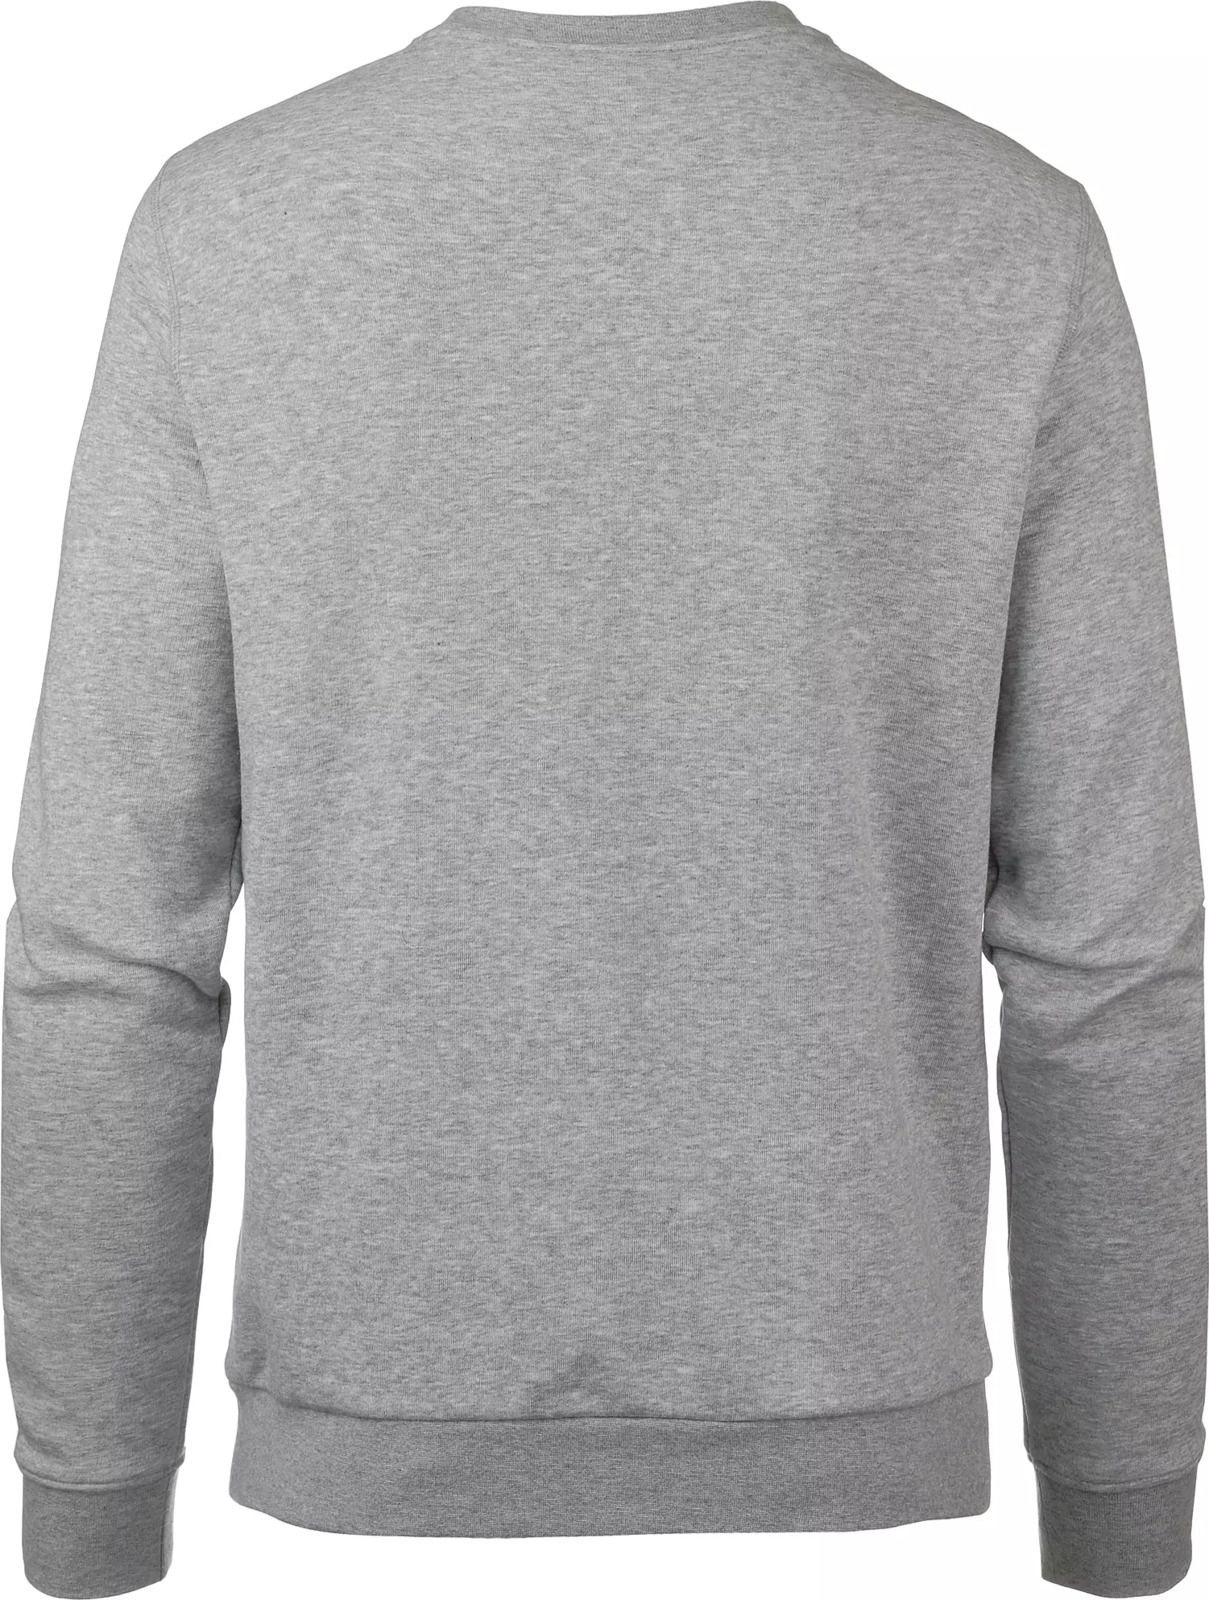   Jack Wolfskin Logo Sweatshirt M, : -. 5018891-6111.  XXL (54)